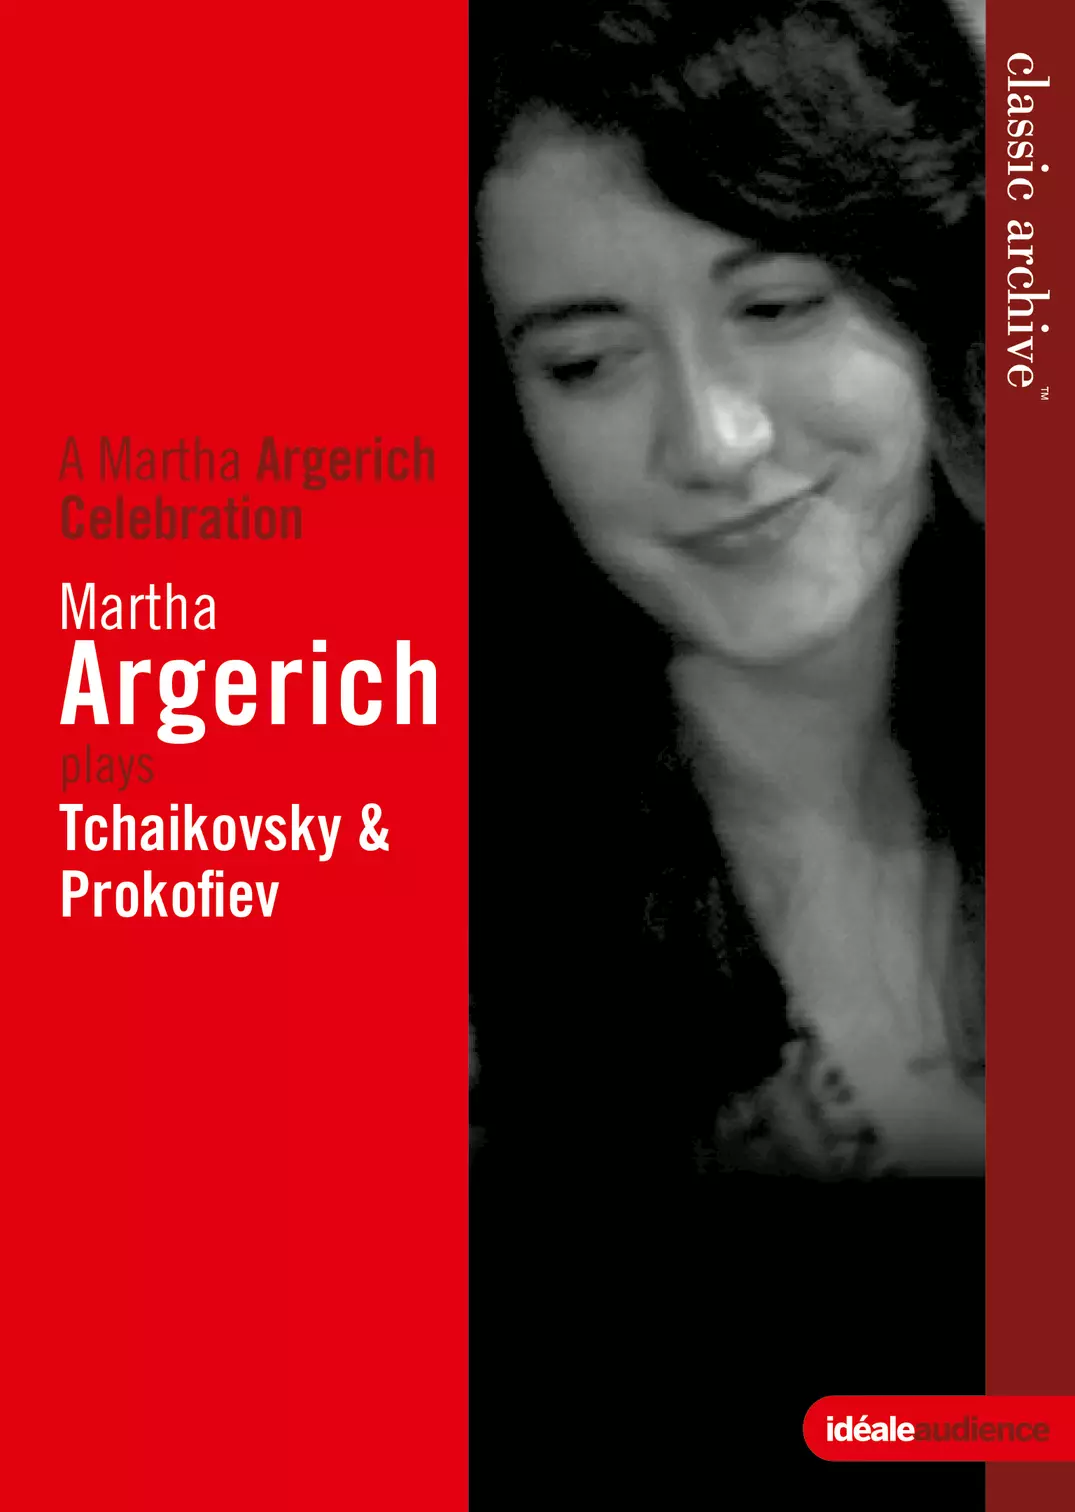 Classic Archive: Martha Argerich plays Tchaikovsky & Prokofiev